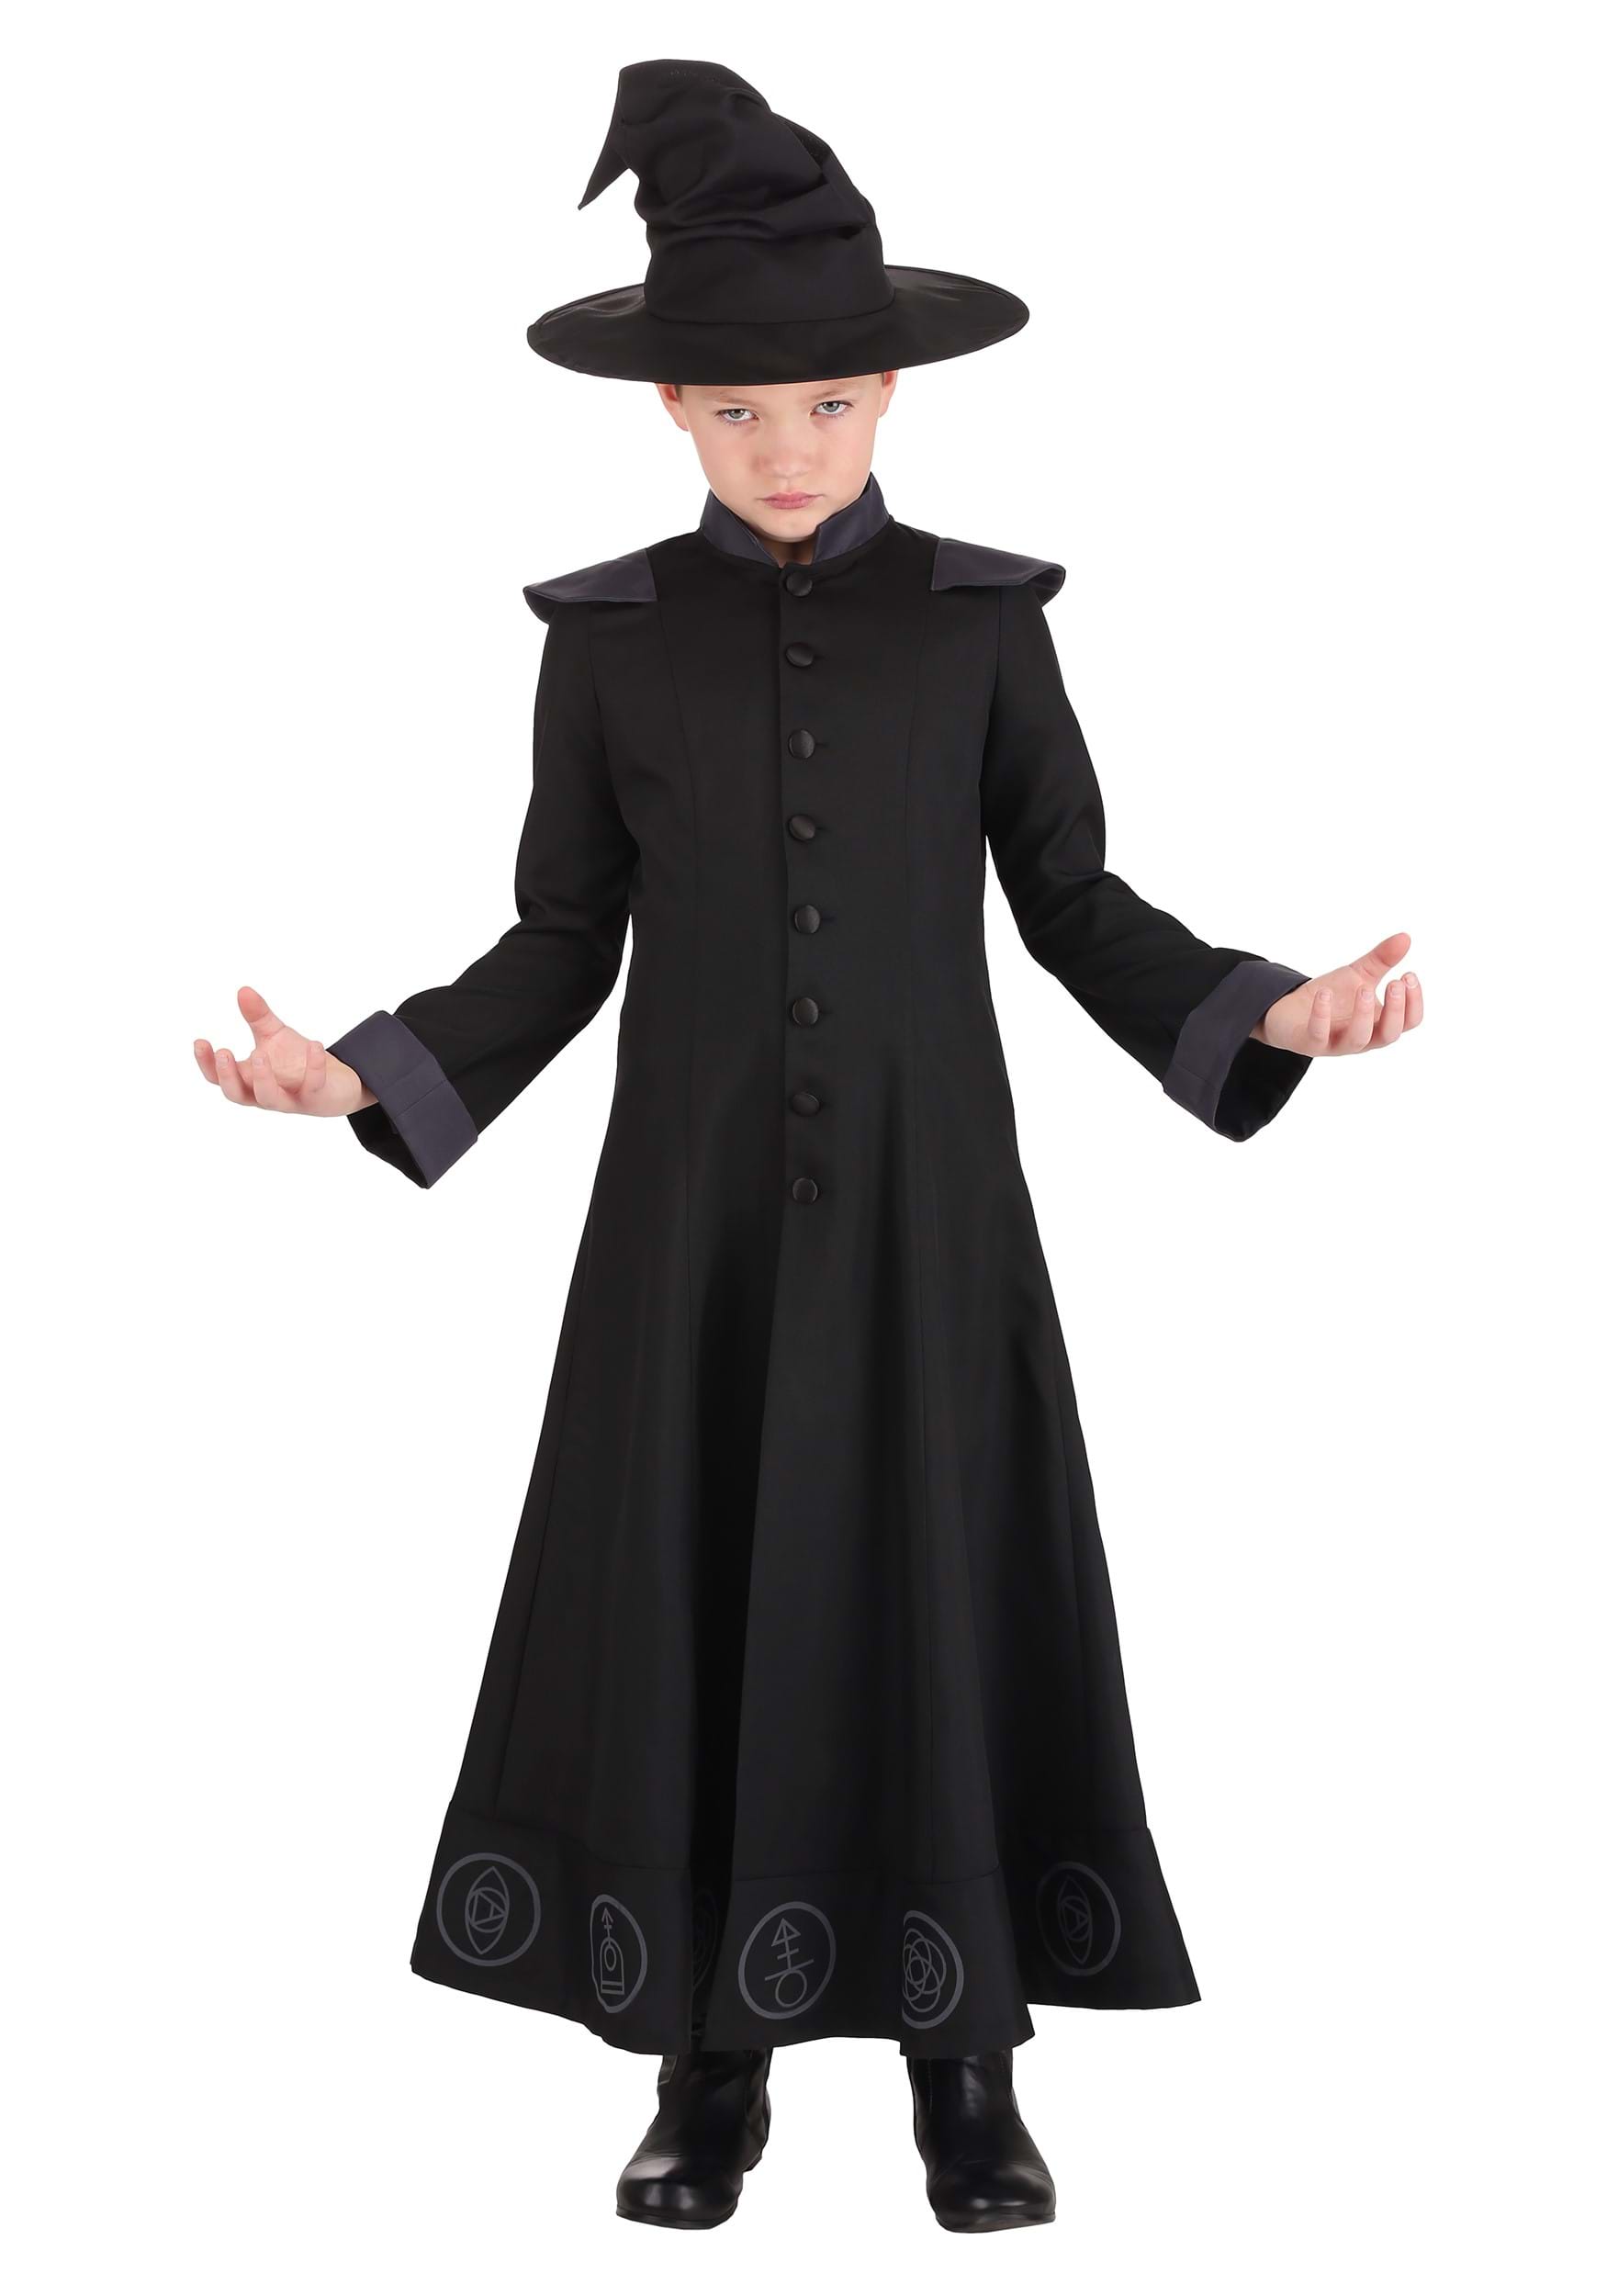 Photos - Fancy Dress FUN Costumes Warlock Costume for Kids Black FUN6237CH